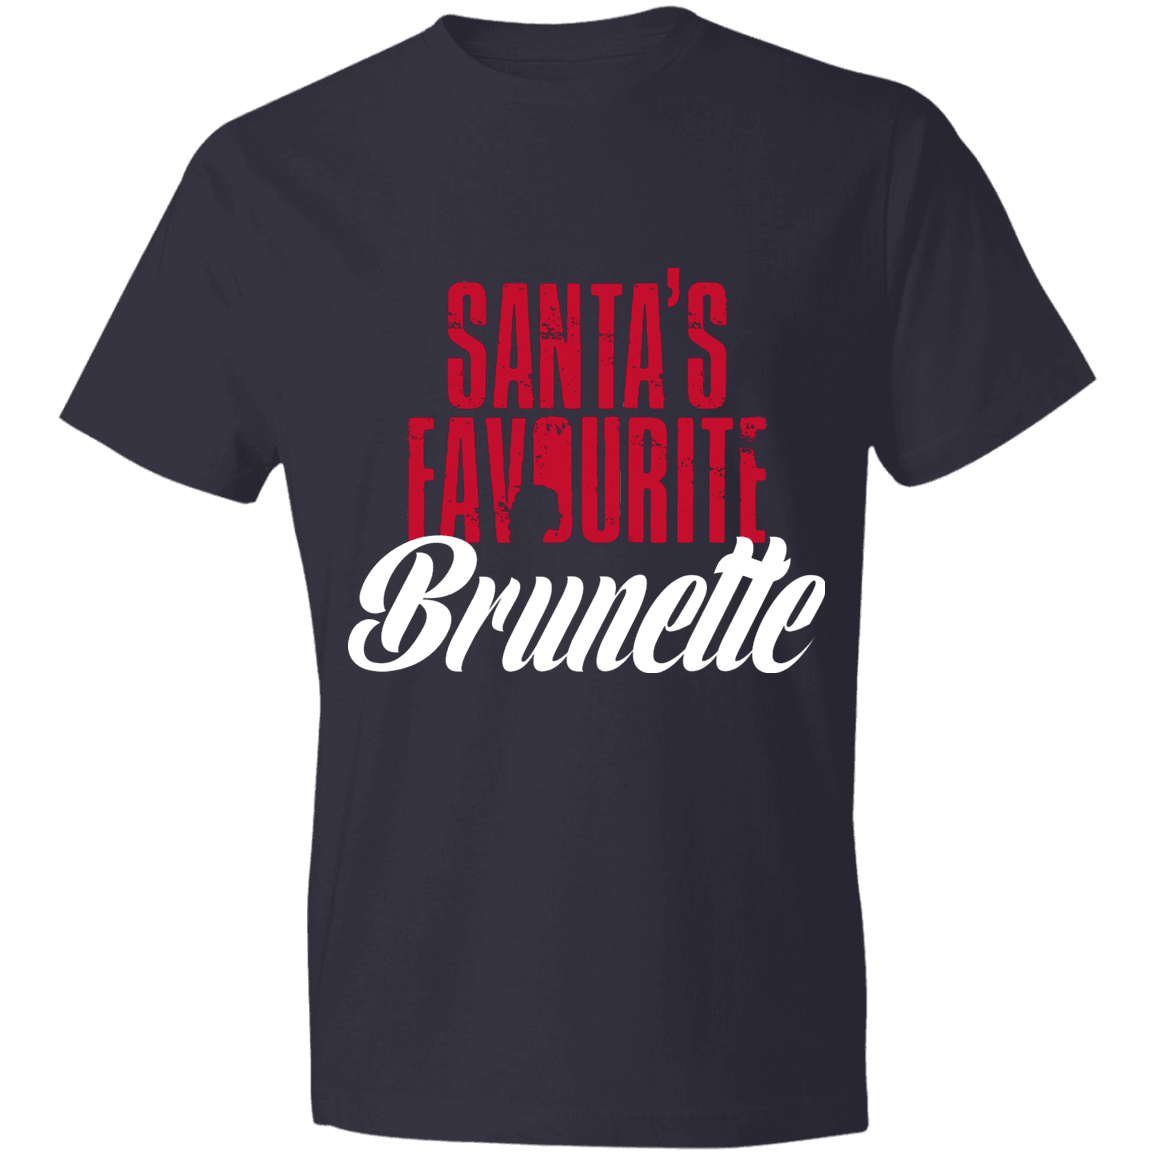 Designs by MyUtopia Shout Out:Santa's Favourite Brunette - Lightweight Unisex T-Shirt,Navy / S,Adult Unisex T-Shirt